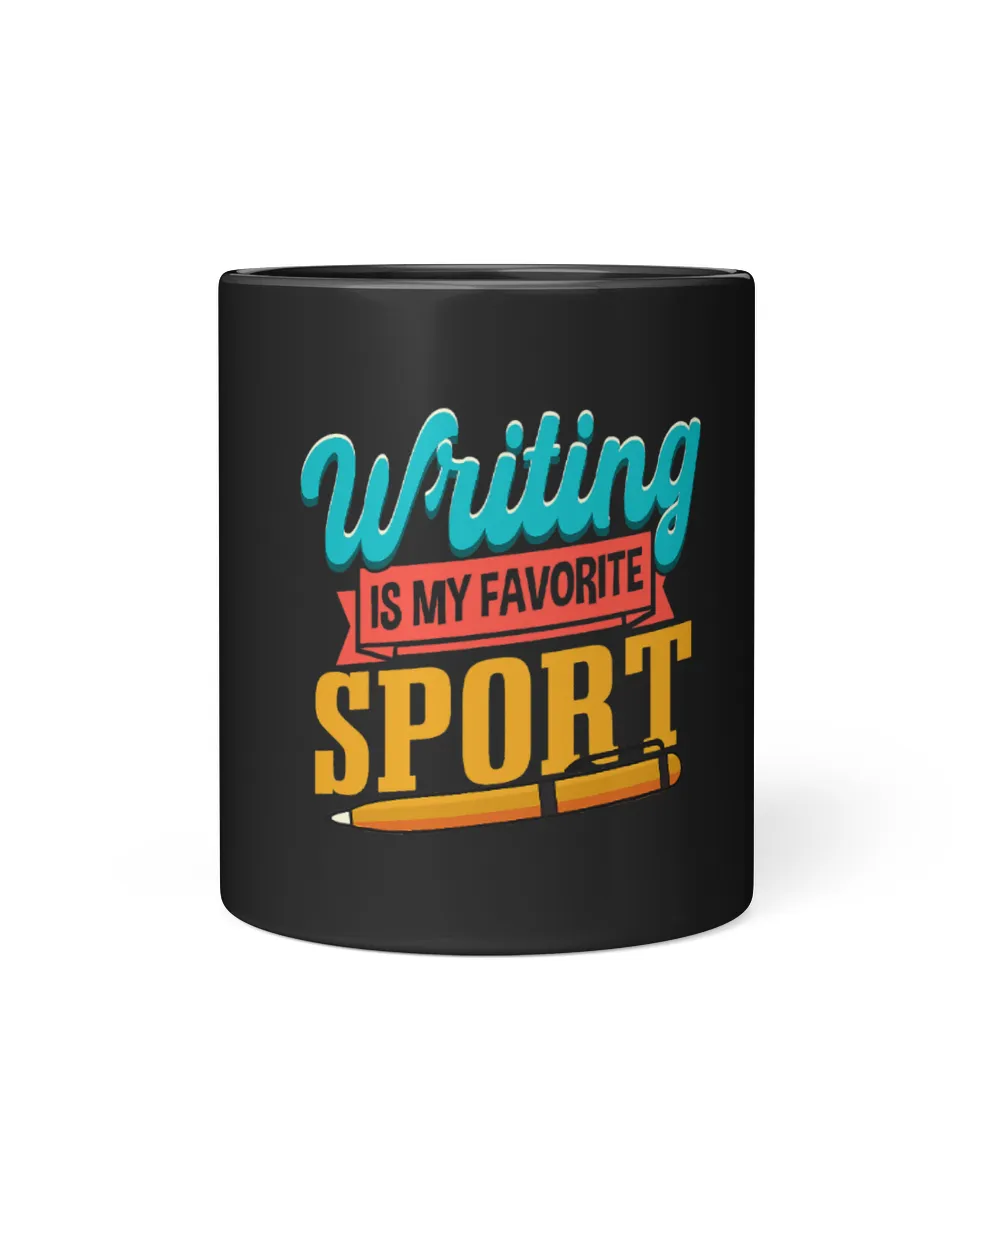 Writers Novelist Writing Is My Favorite Sport